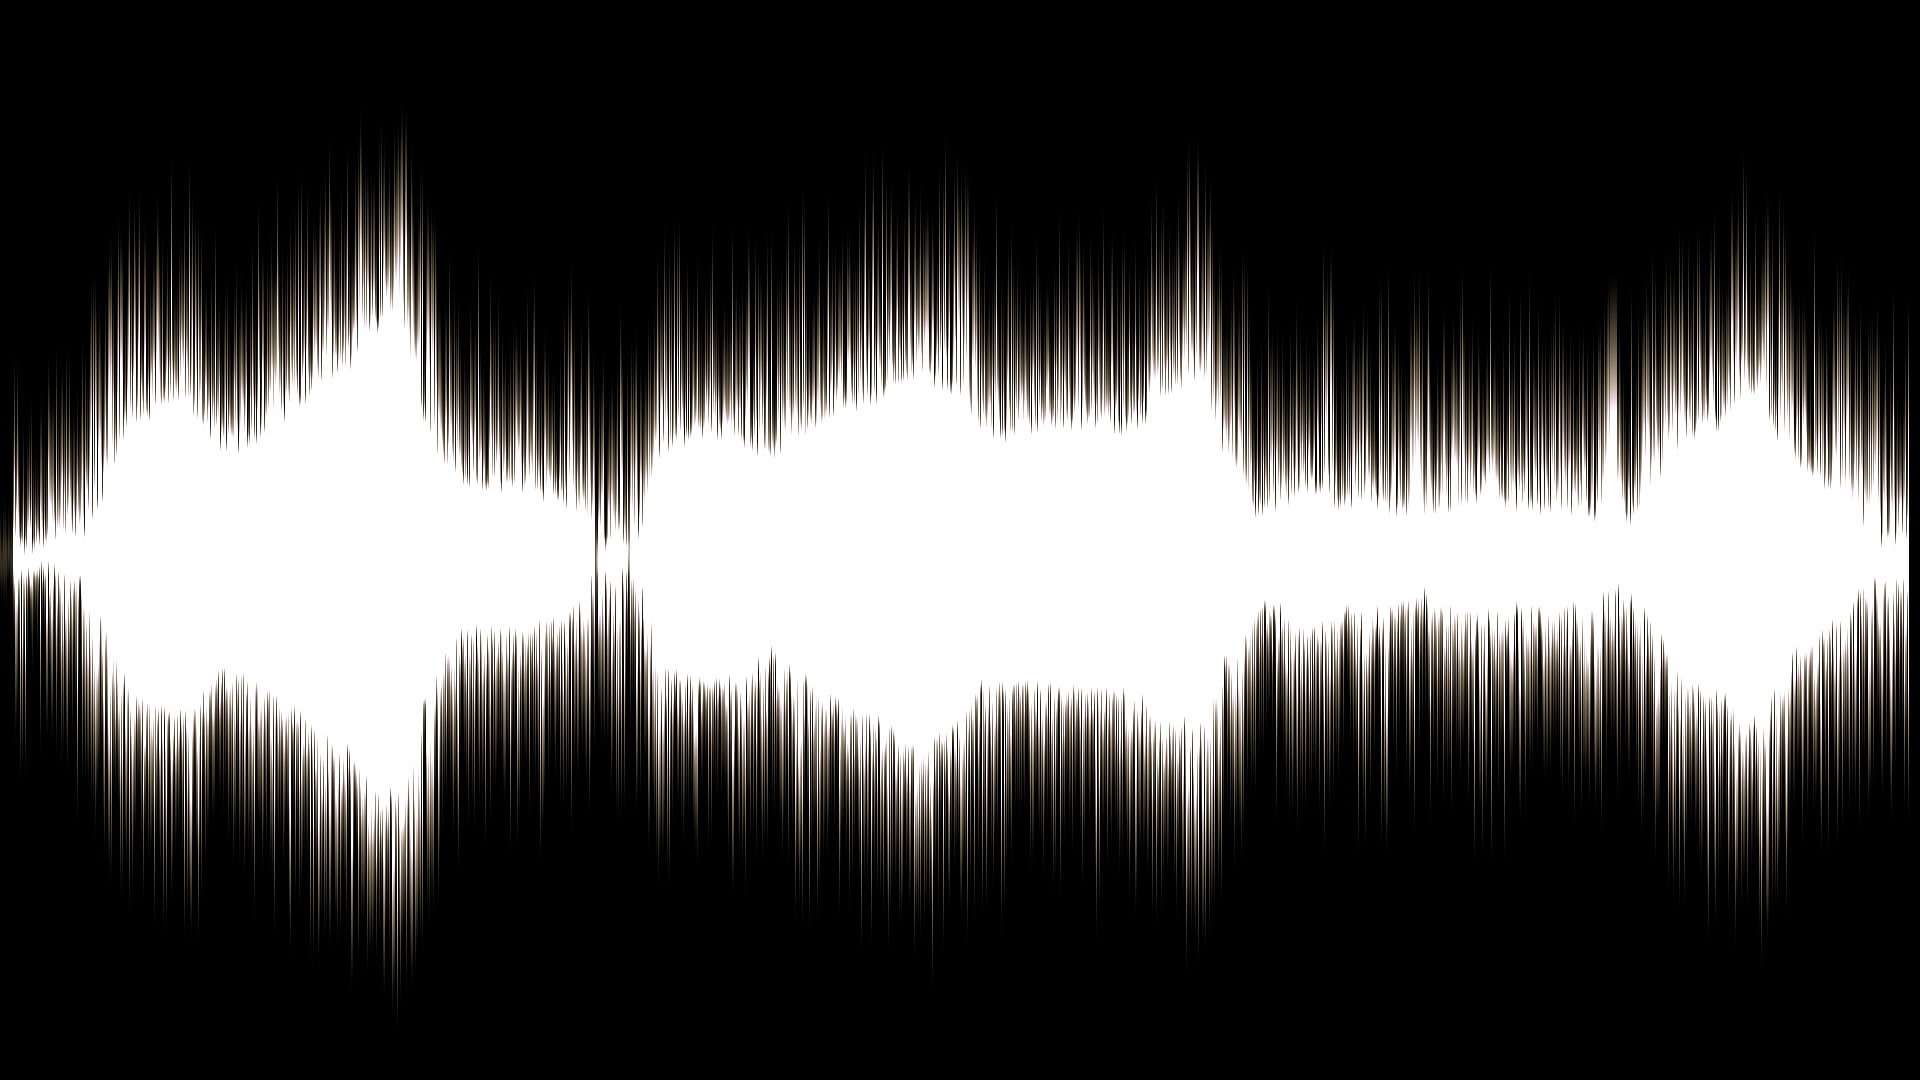 Music Sound Waves Live Wallpaper Image